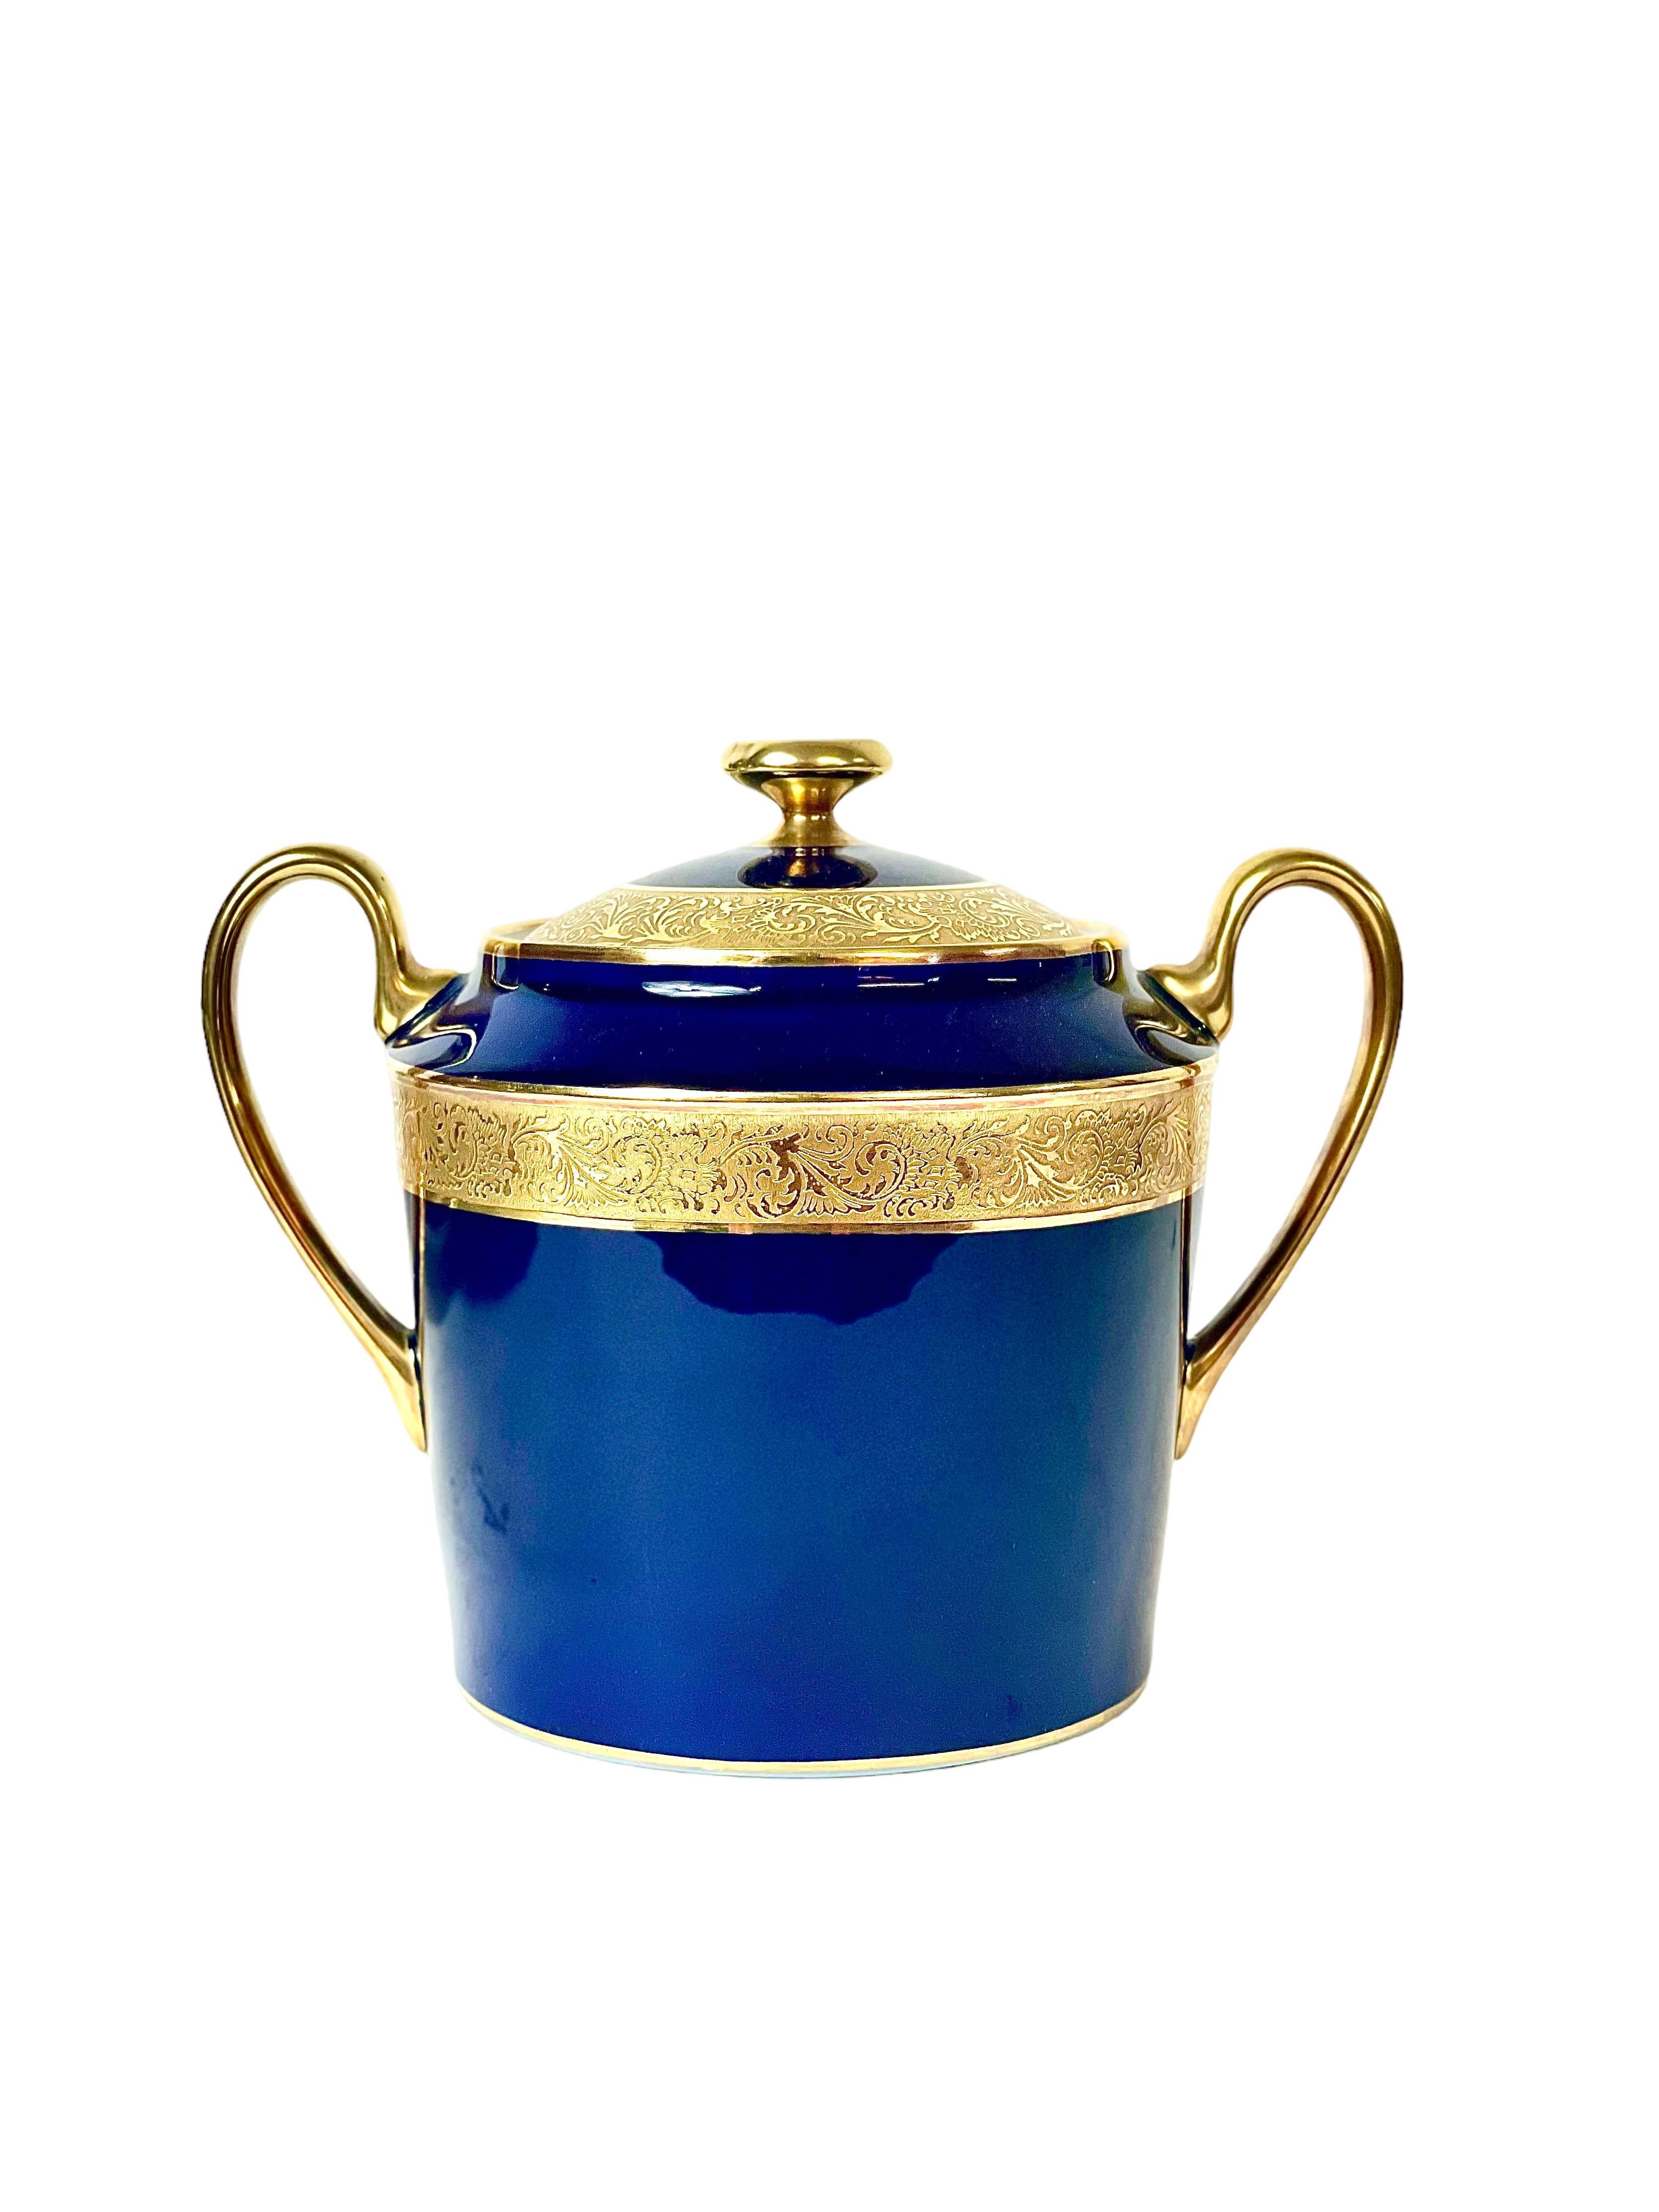 French Limoges Porcelain Service Glazed in an Opulent Royal Blue with Gilt Edges For Sale